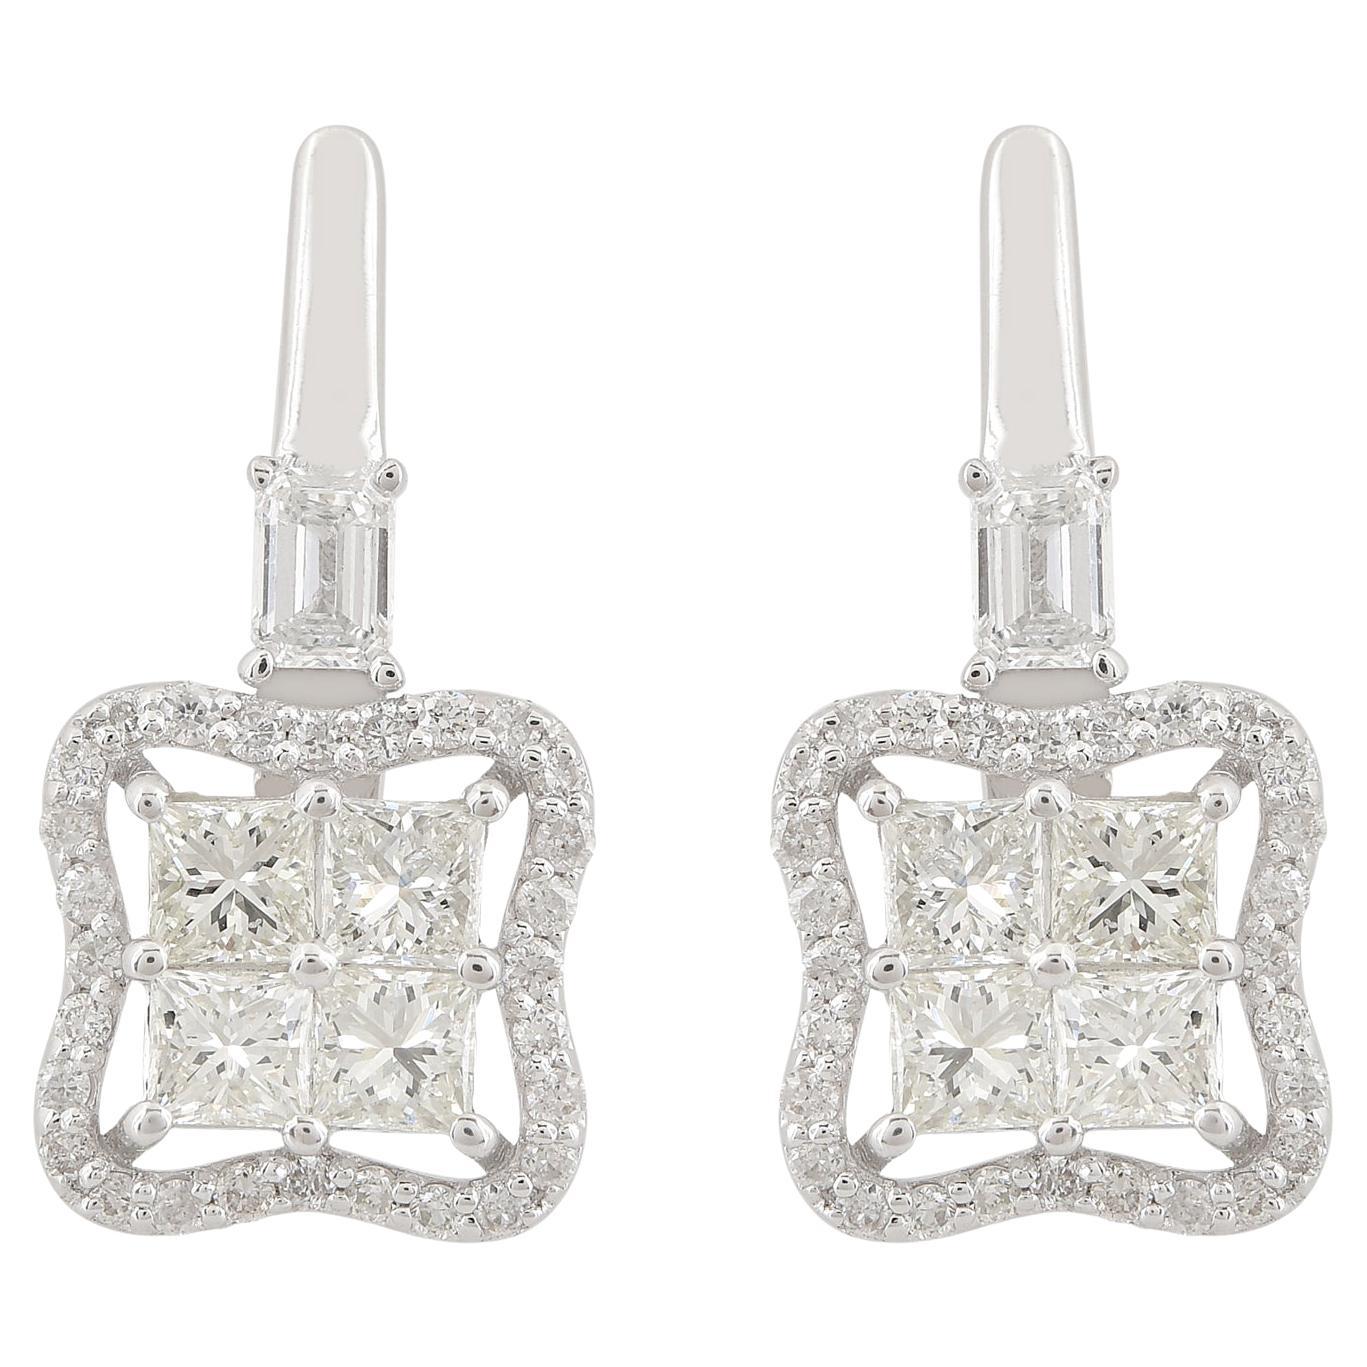 Real 1.32 Carat Diamond Clover Stud Earrings 14k White Gold Handmade Jewelry For Sale